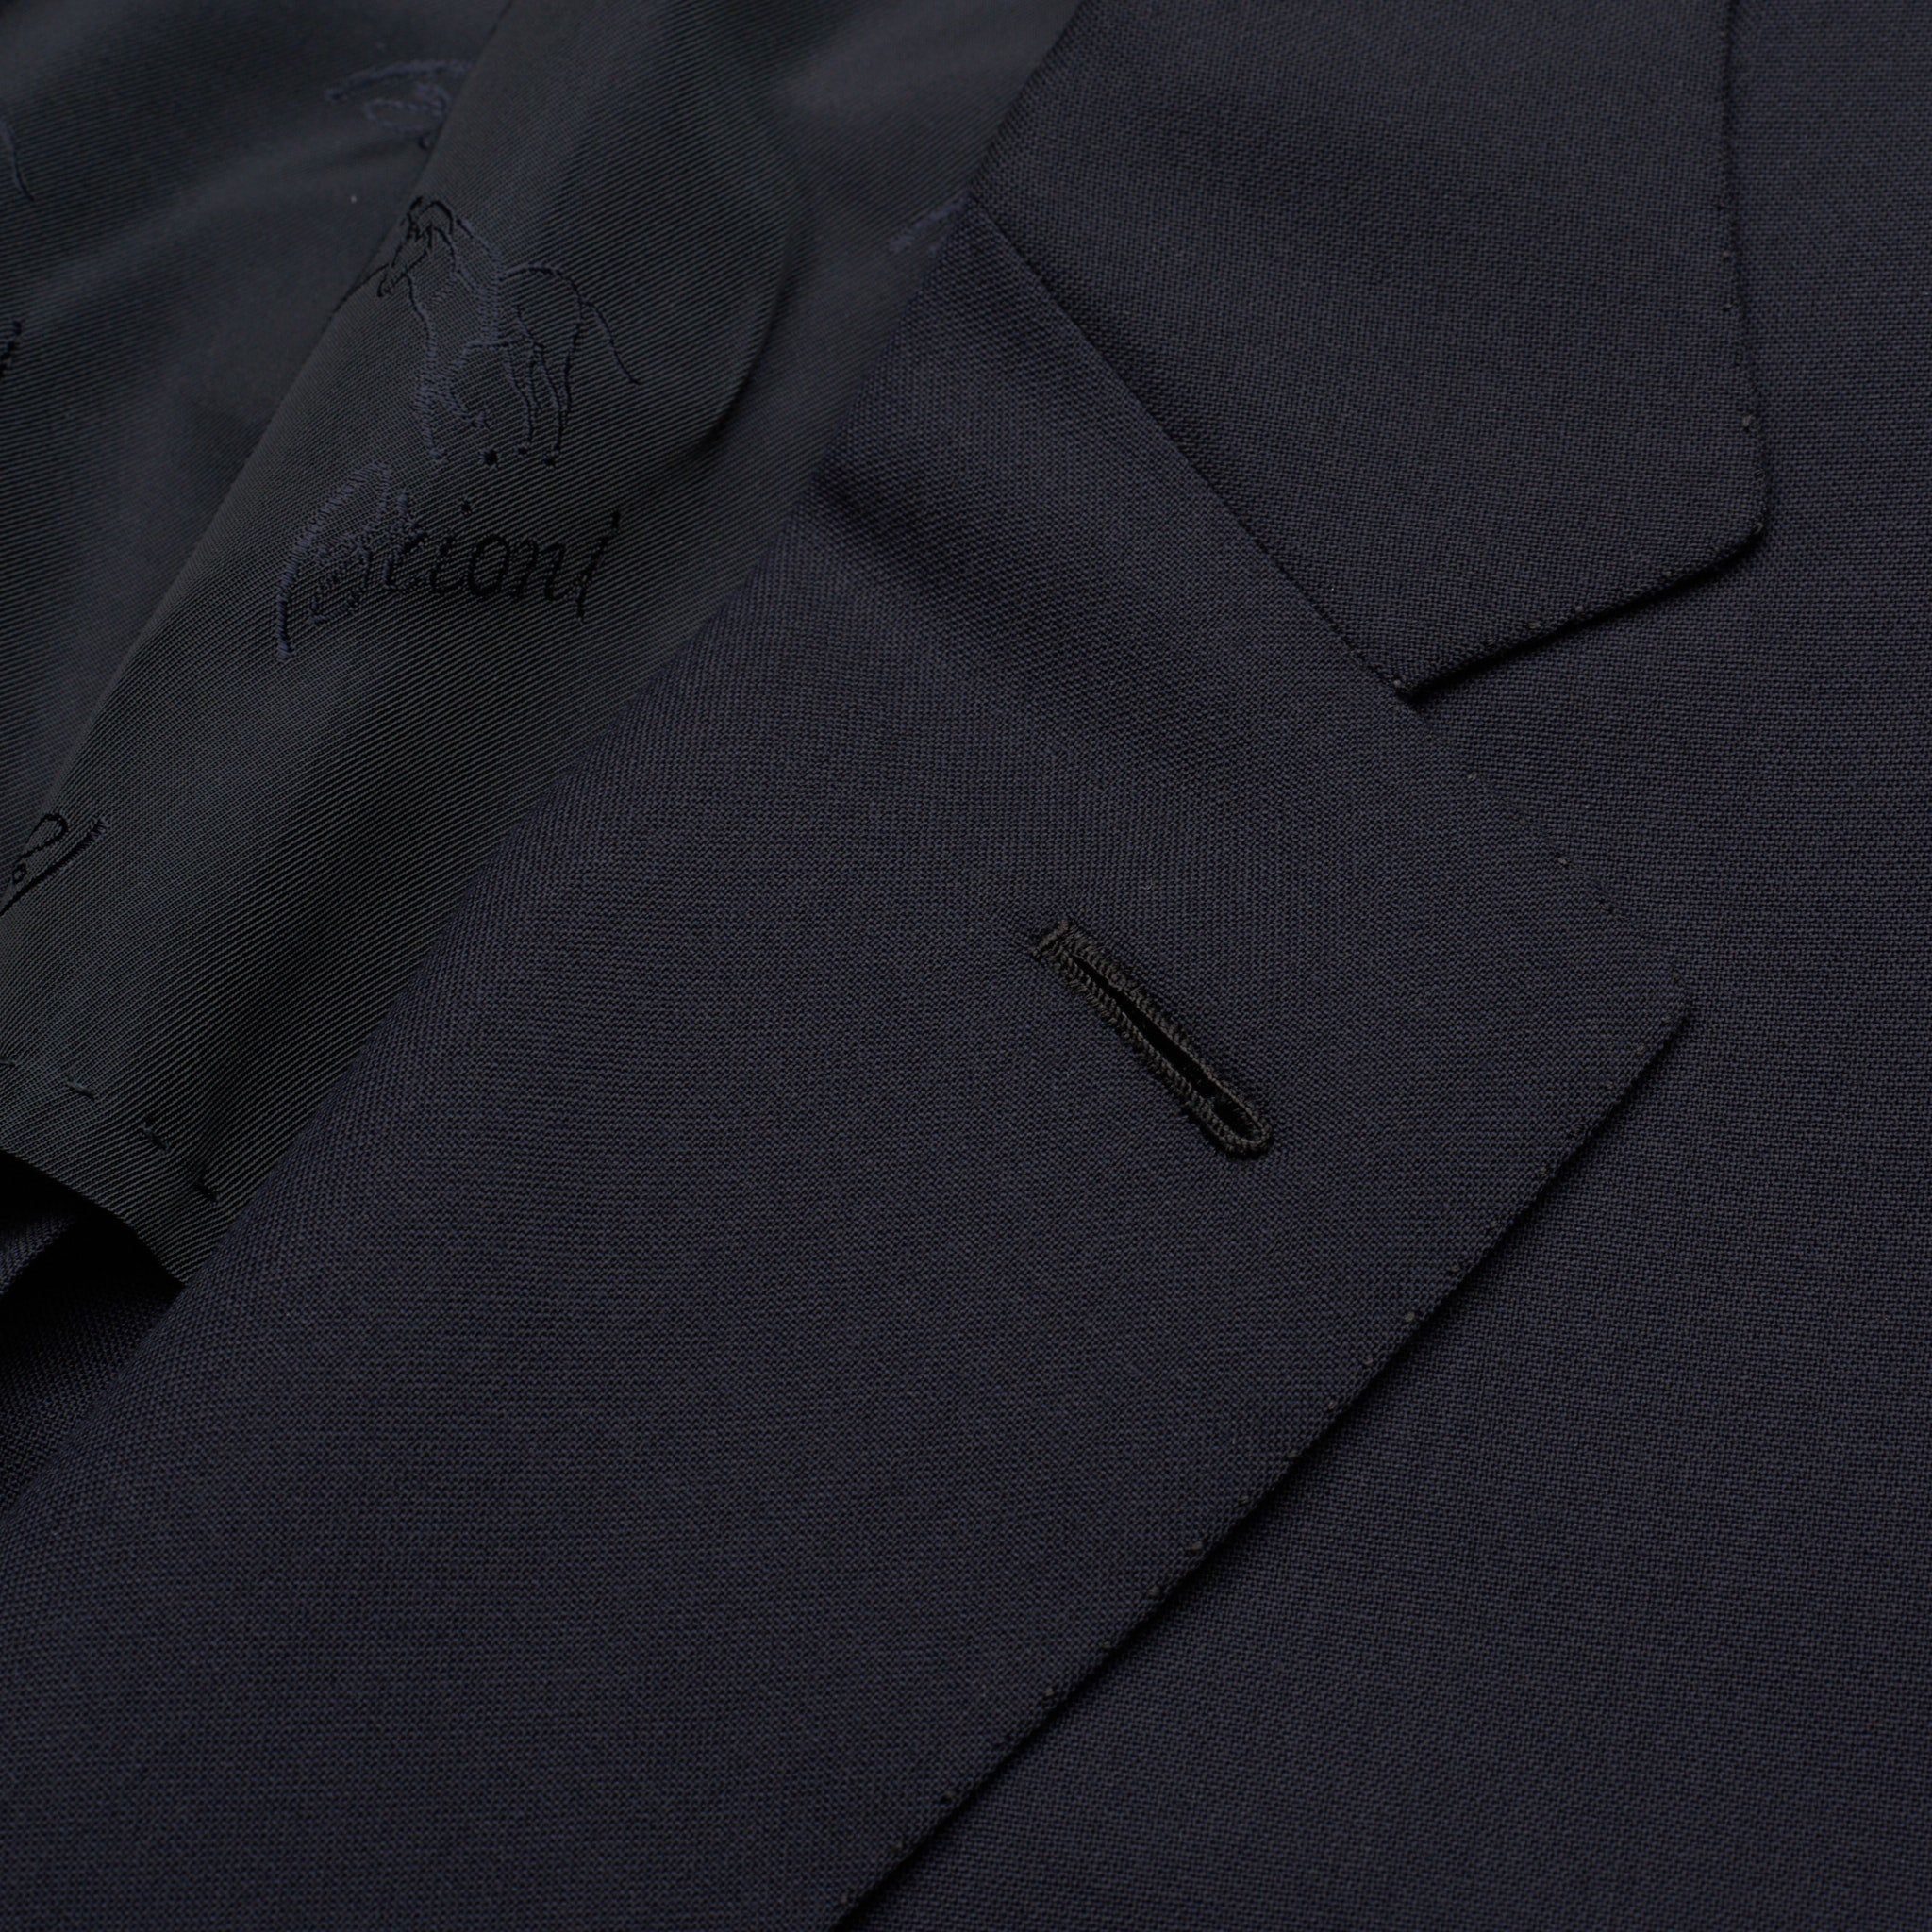 BRIONI "BRUNICO" Handmade Midnight Blue Wool Jacket NEW